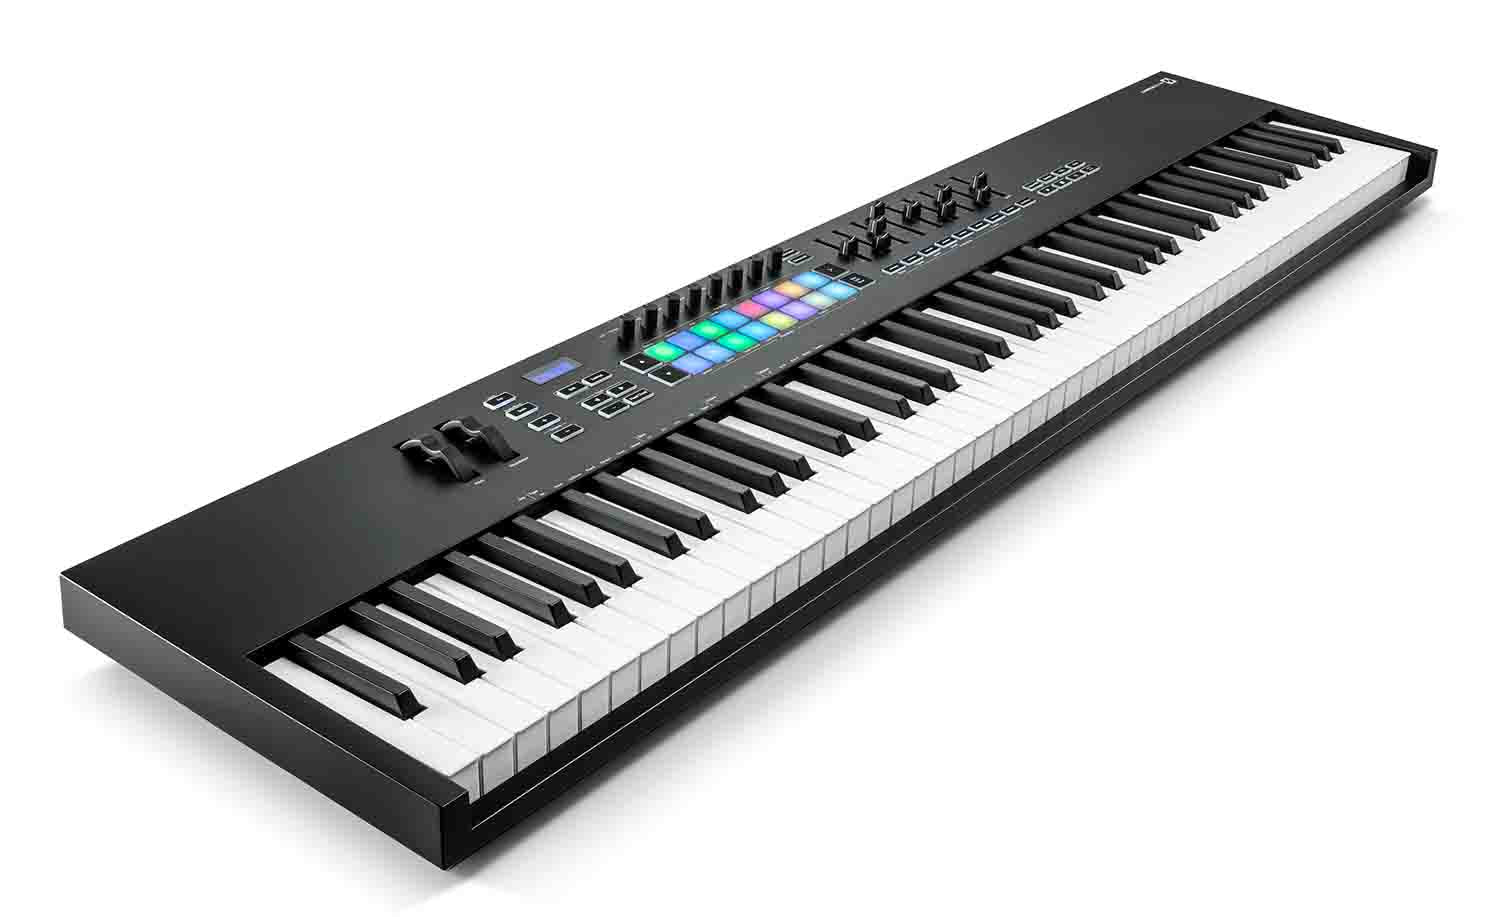 Novation Launchkey 88 MK3 MIDI Keyboard Controller - Hollywood DJ